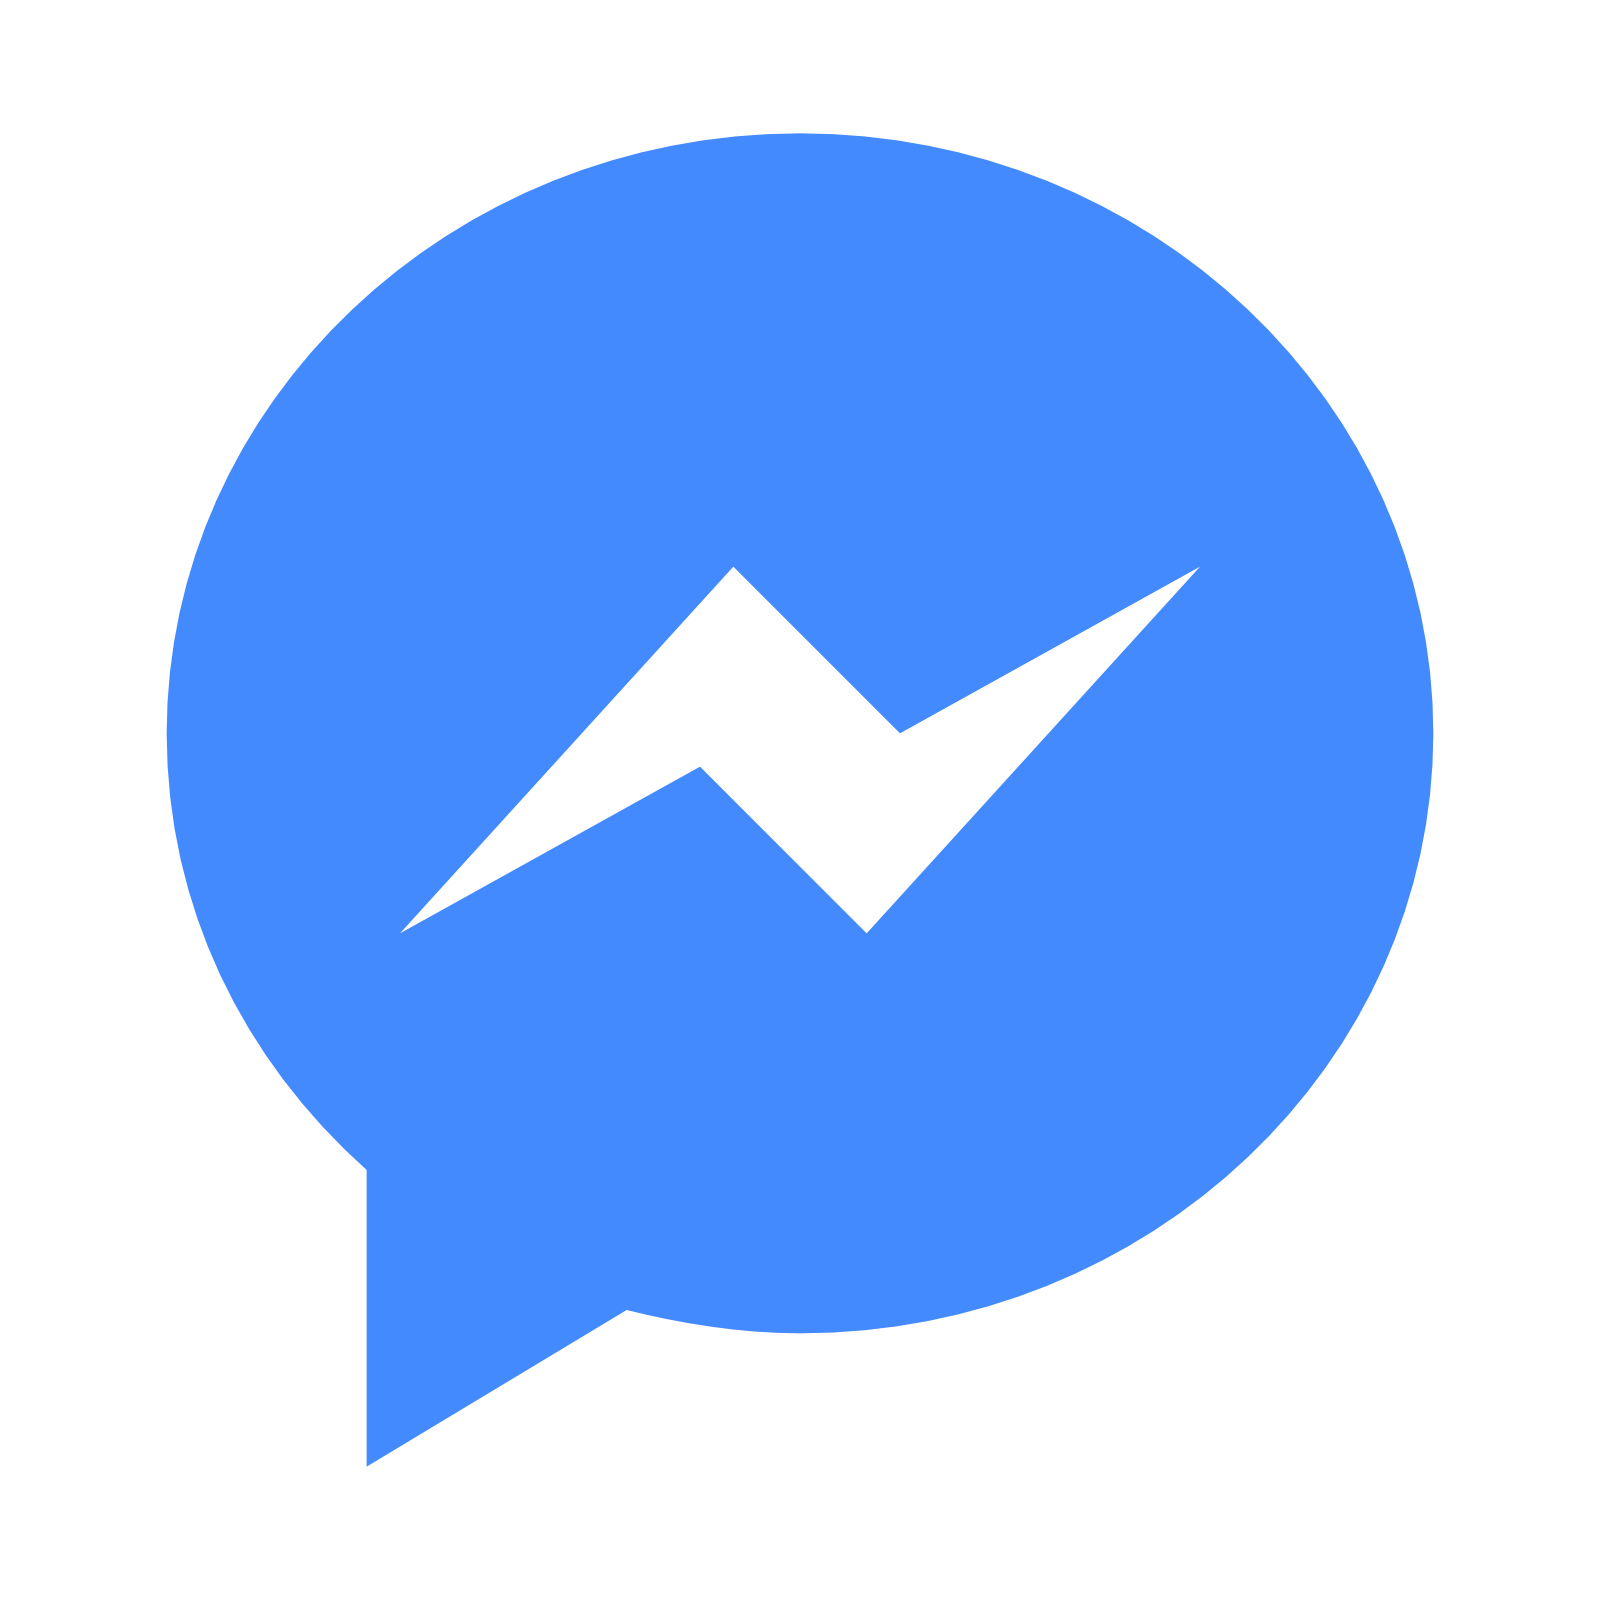 Google Messenger Logo - Facebook Messenger Logo Transparent PNG Pictures - Free Icons and ...